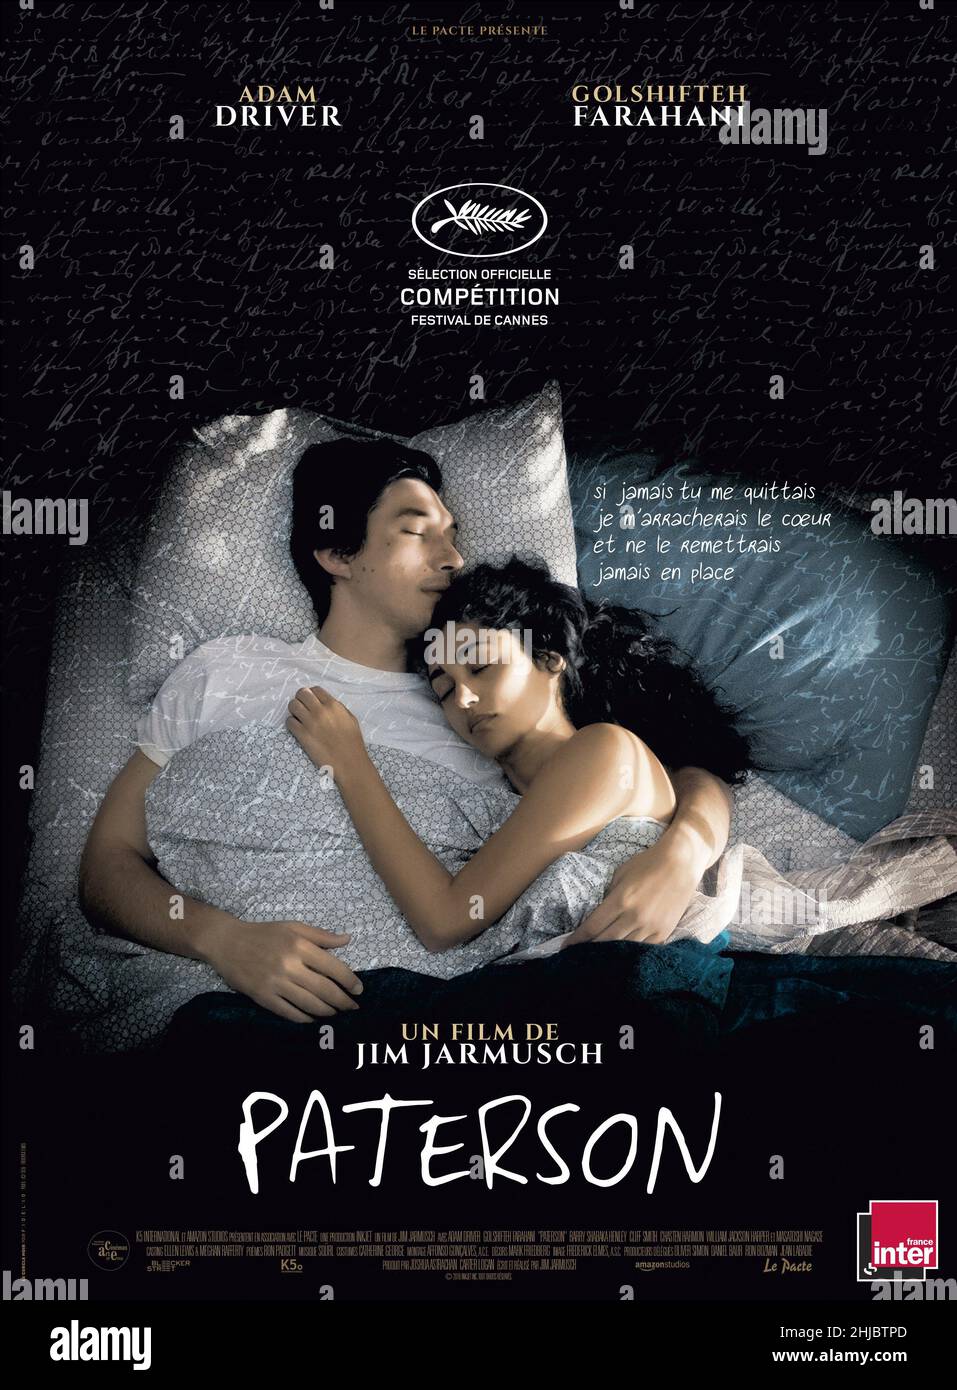 Paterson anno : 2016 USA / Francia / Germania Direttore : Jim Jarmusch Adam  driver, Poster Golshifteh Farahani francese Foto stock - Alamy